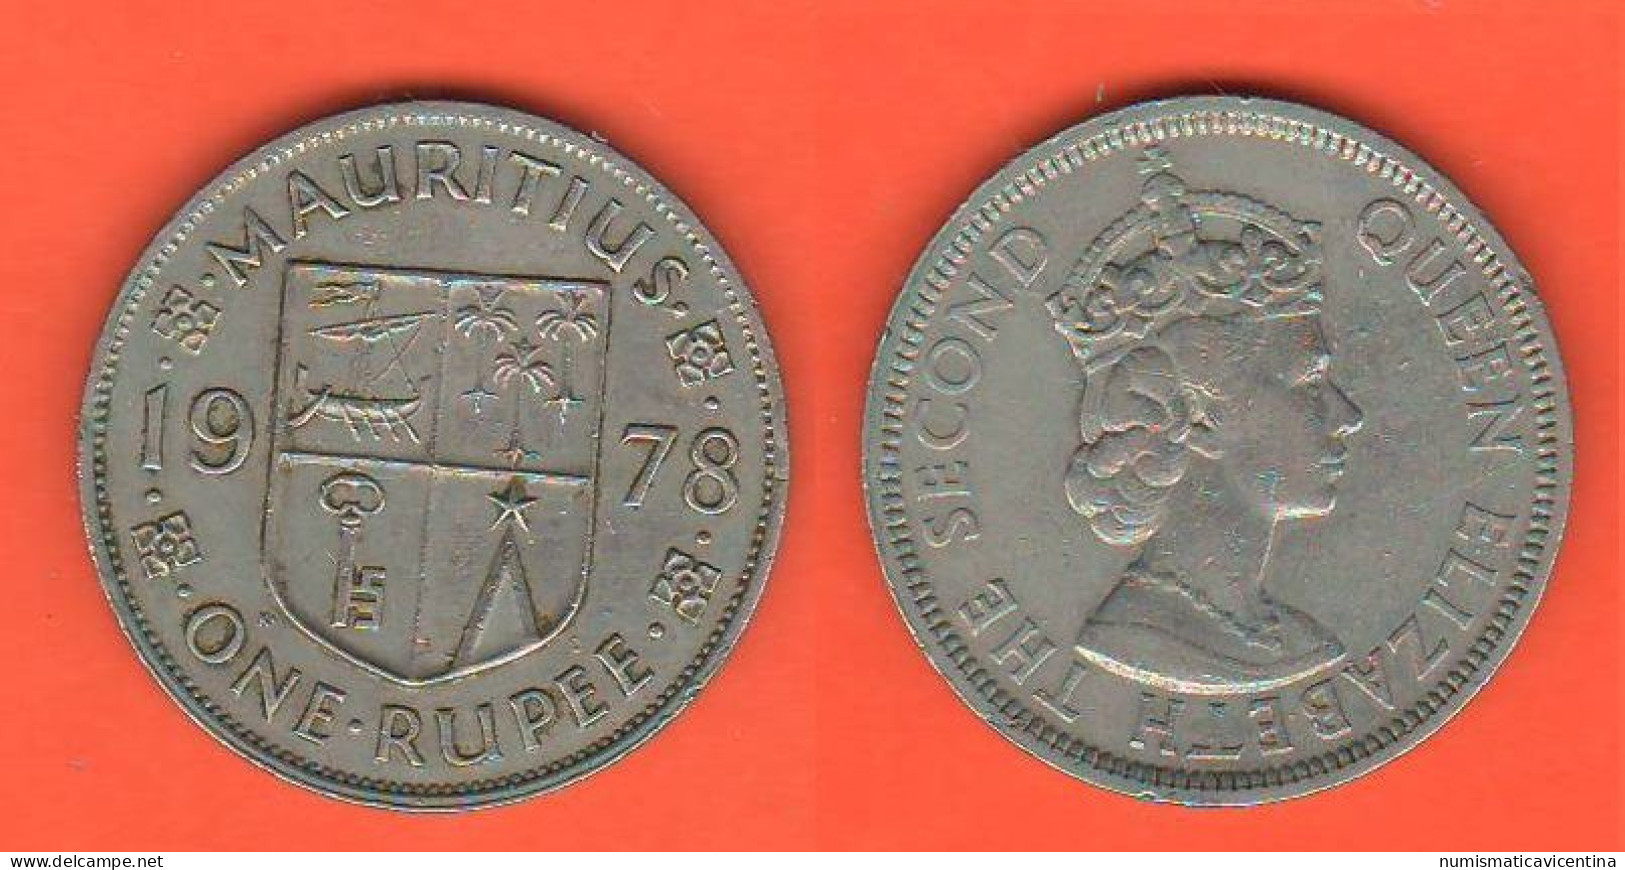 Mauritius One Rupee 1978 Nickel Coin Queen Elizabeth II° - Maurice